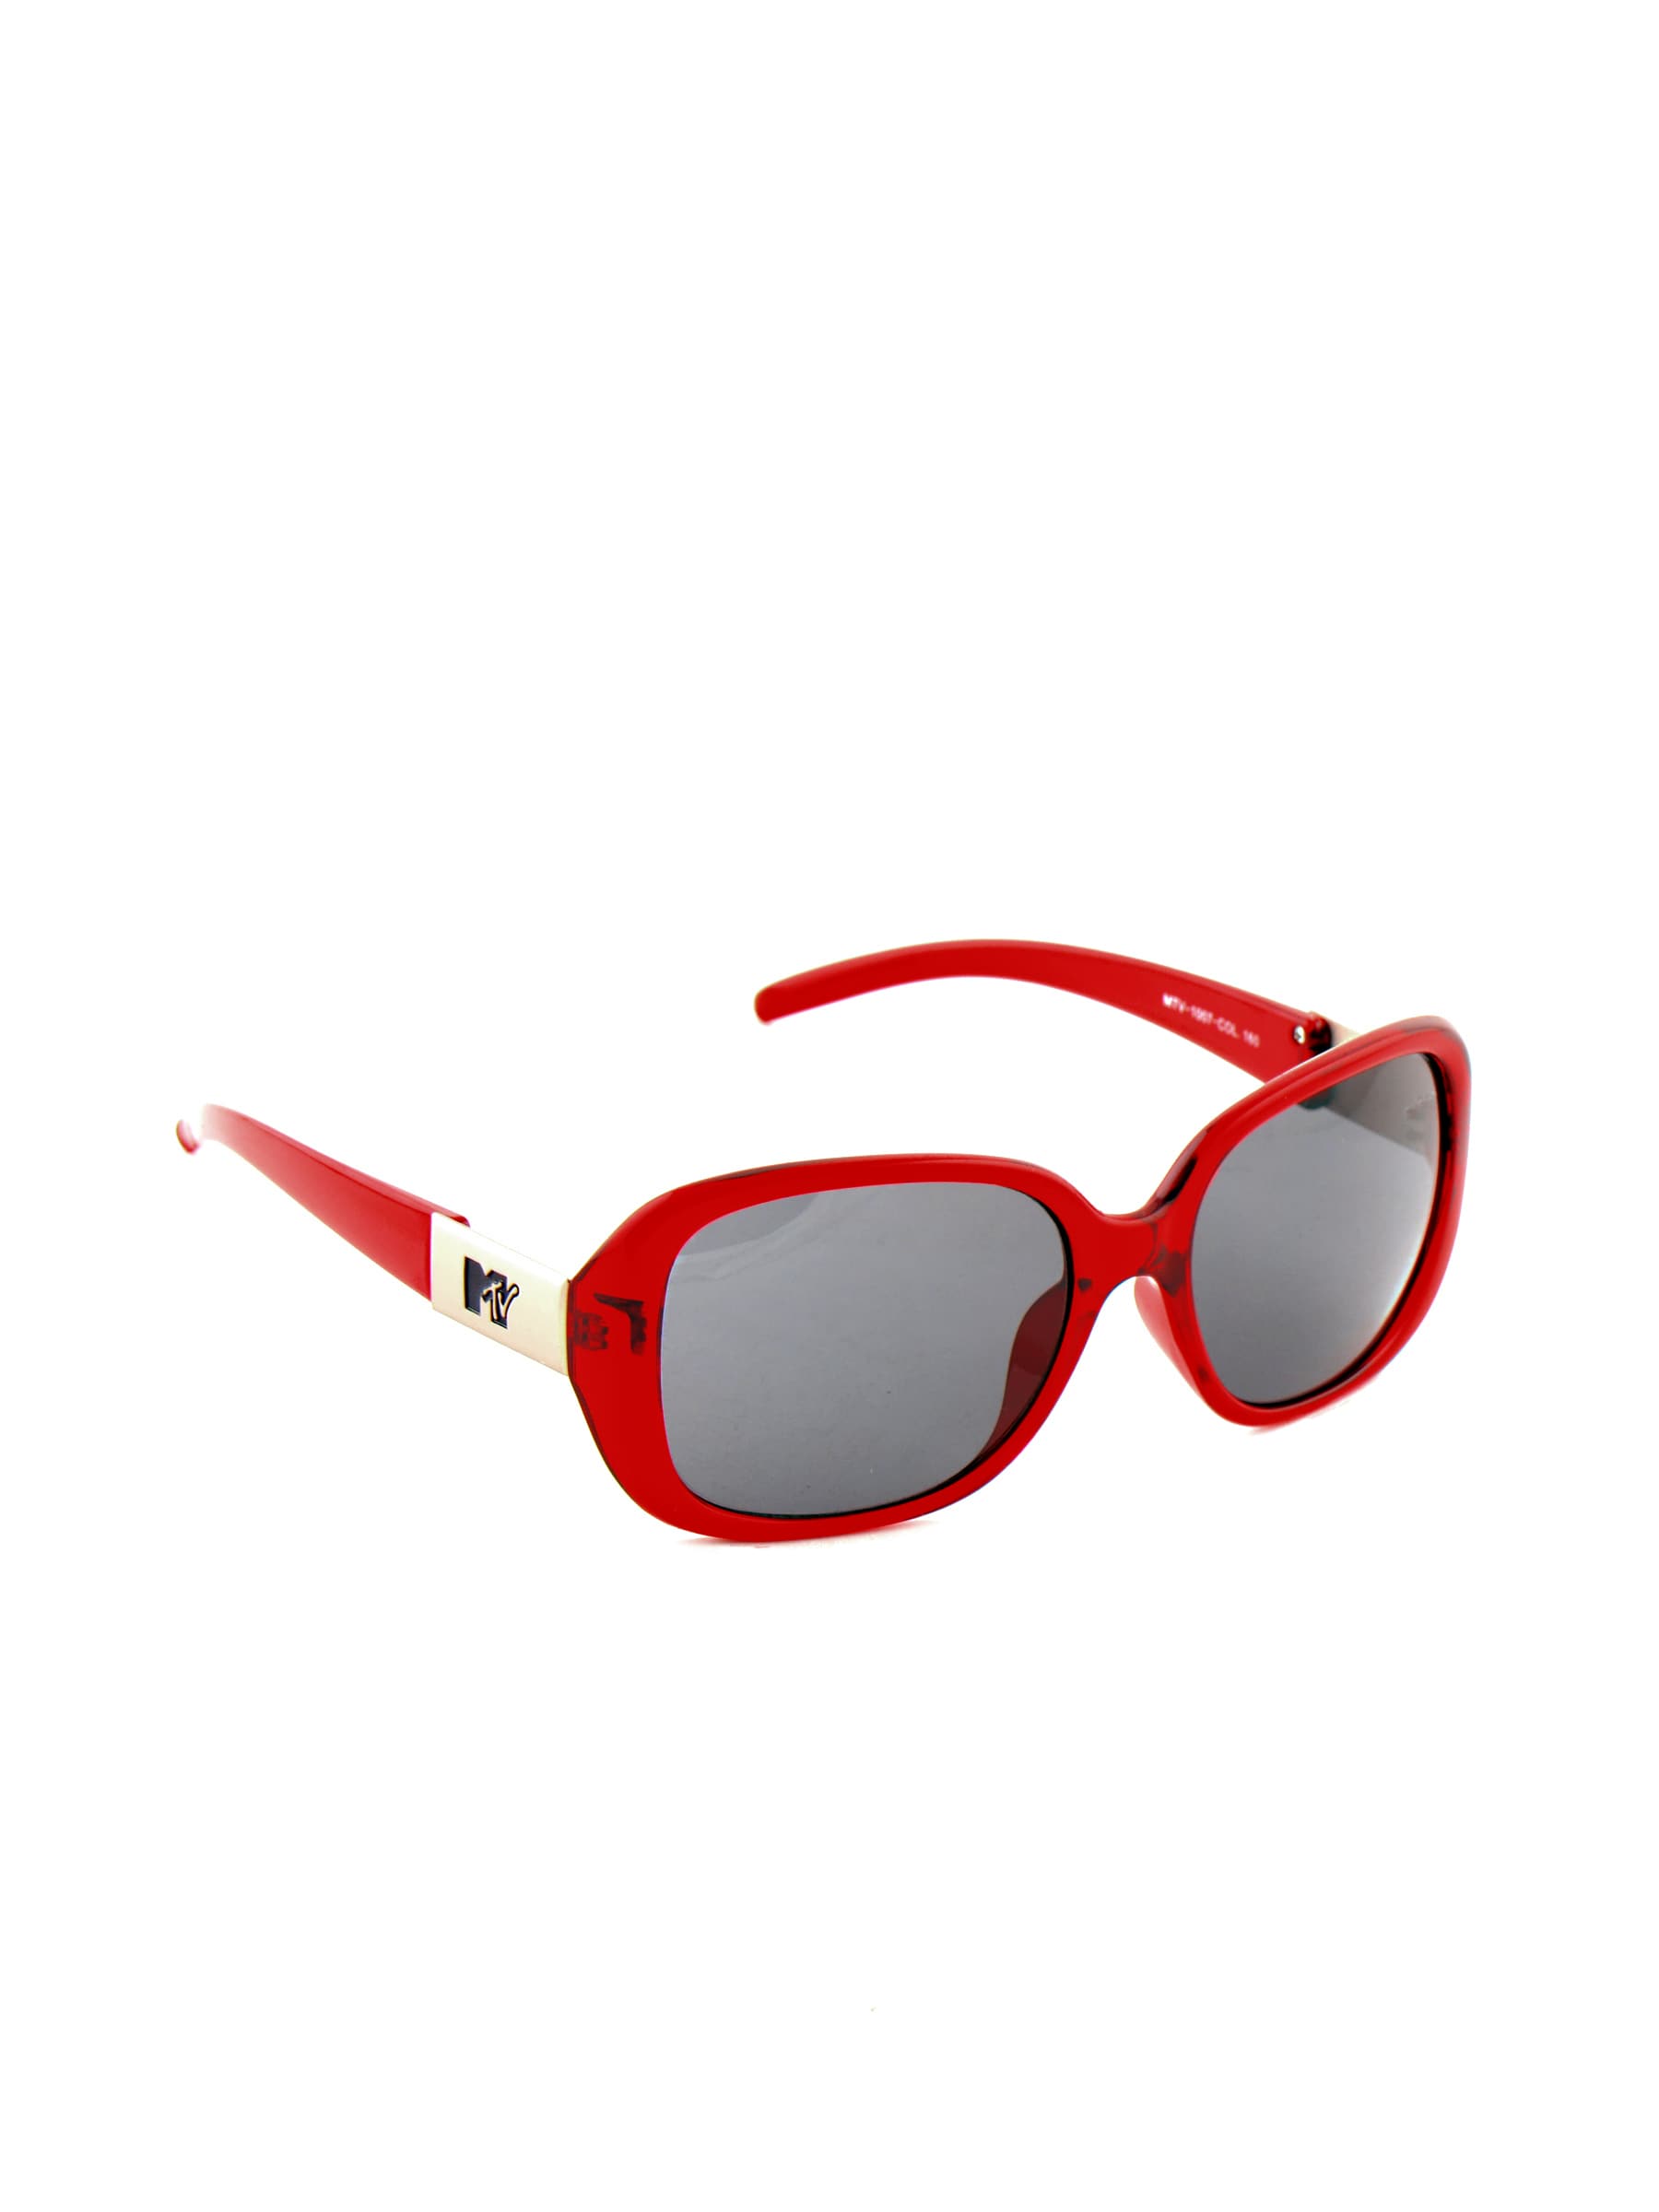 M tv Women My Fab Eyewear Red Sunglasses